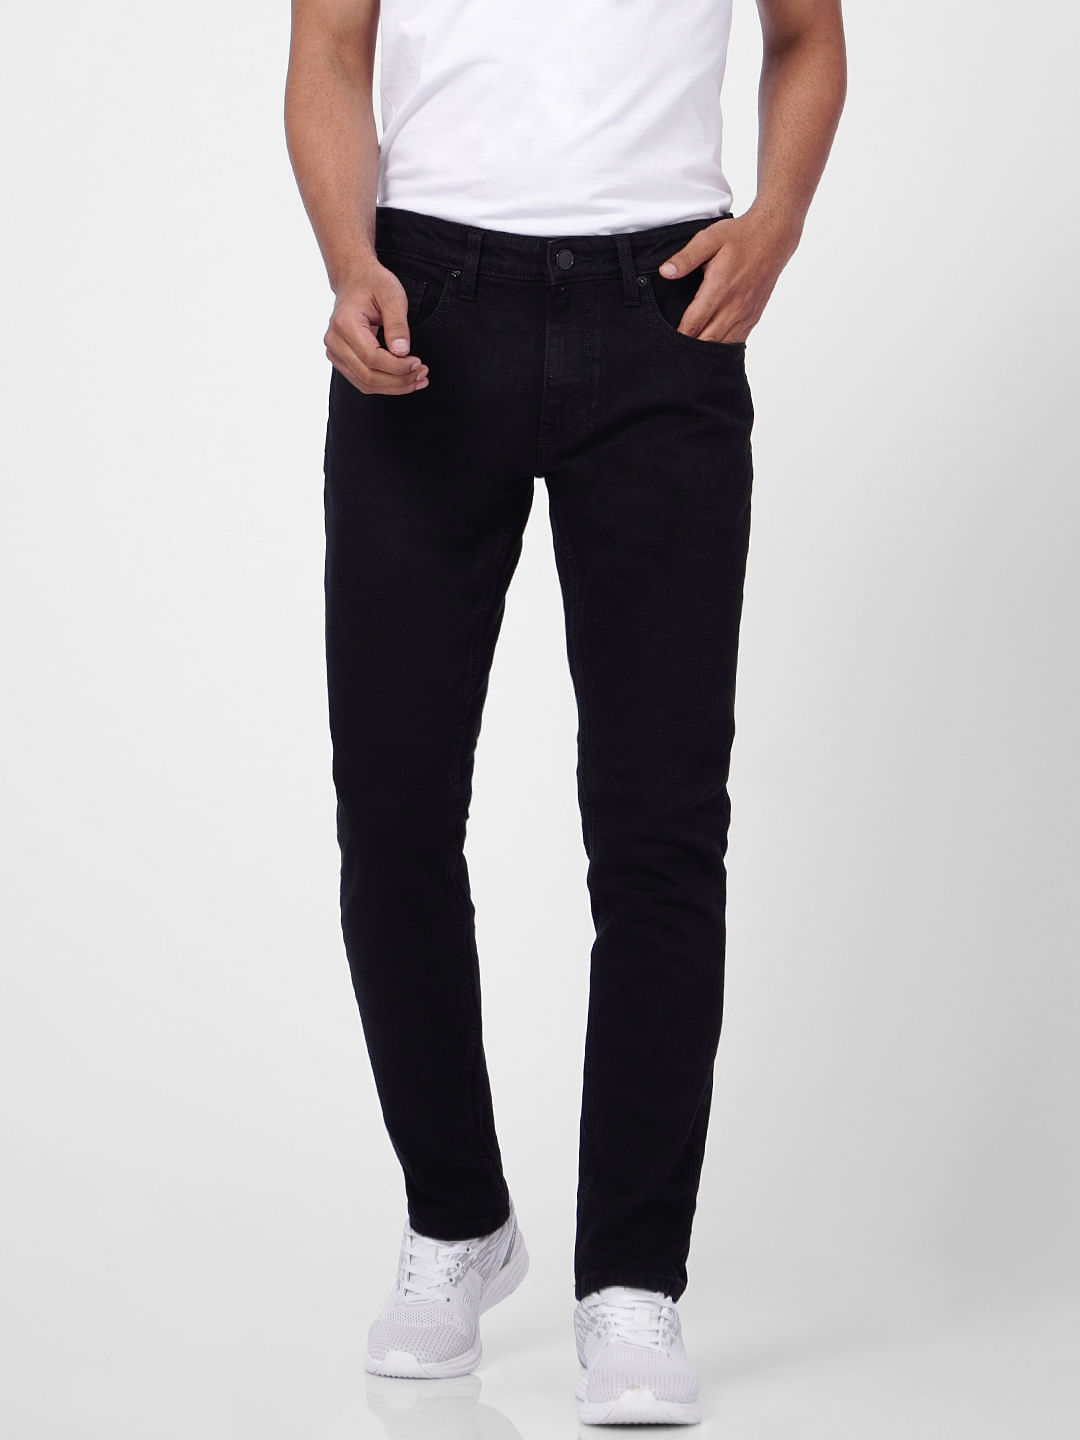 Business Casual Basic: Skinny Black Pants • BrightonTheDay